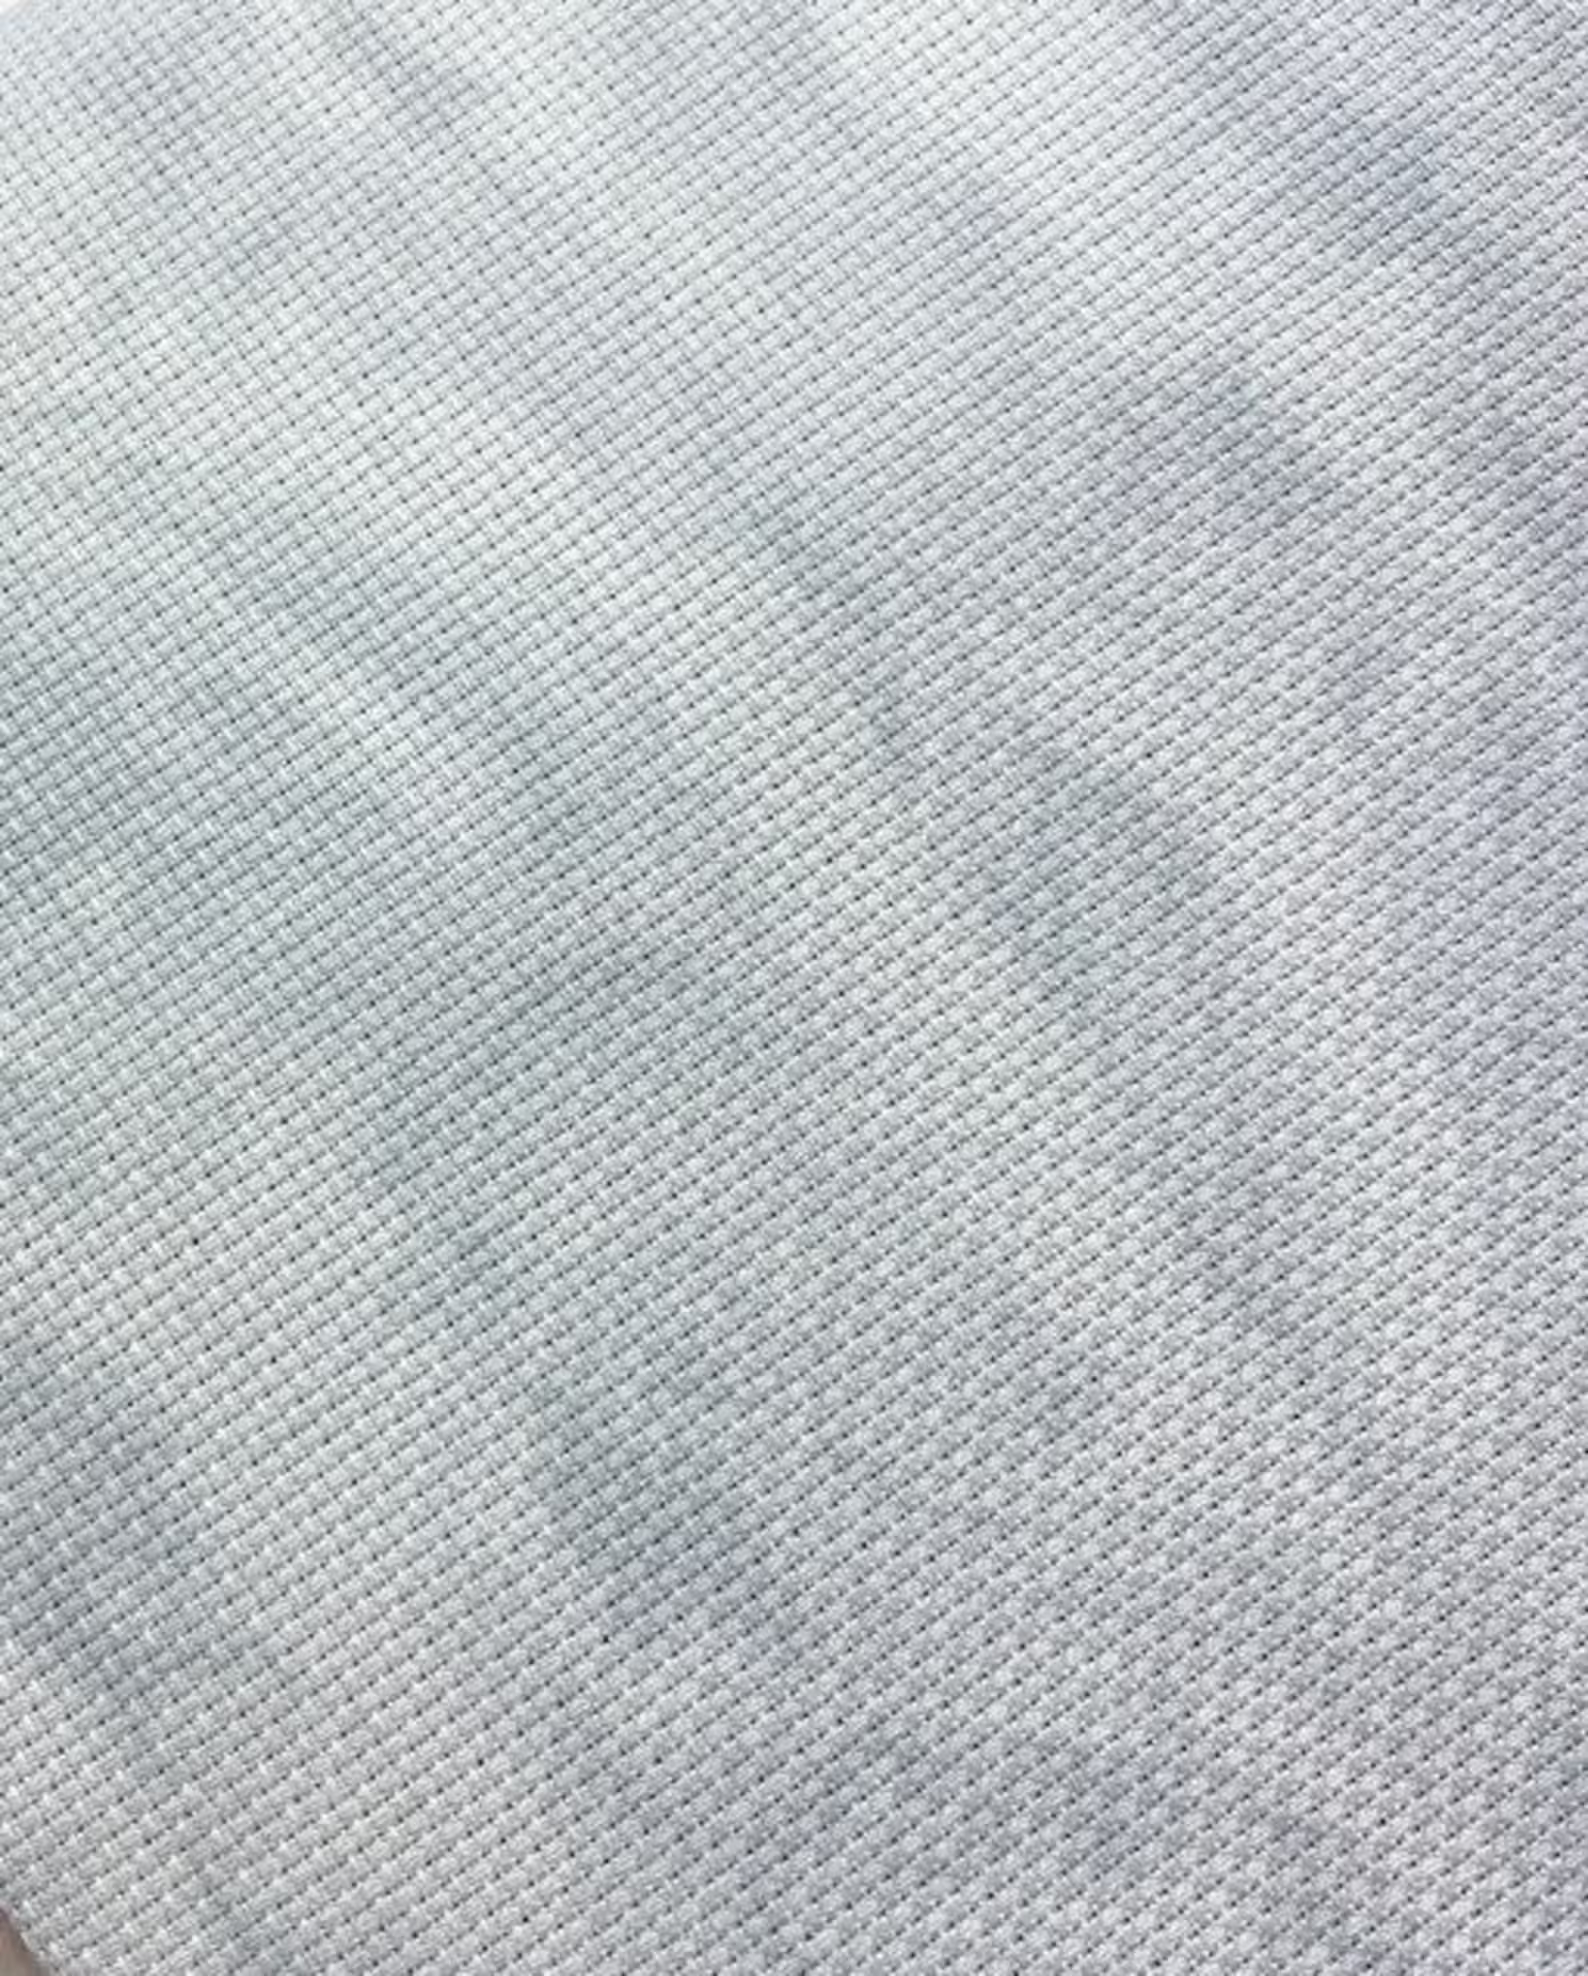 Zweigart Aida Cloth 16 Count 100% Cotton. Choose White, Antique